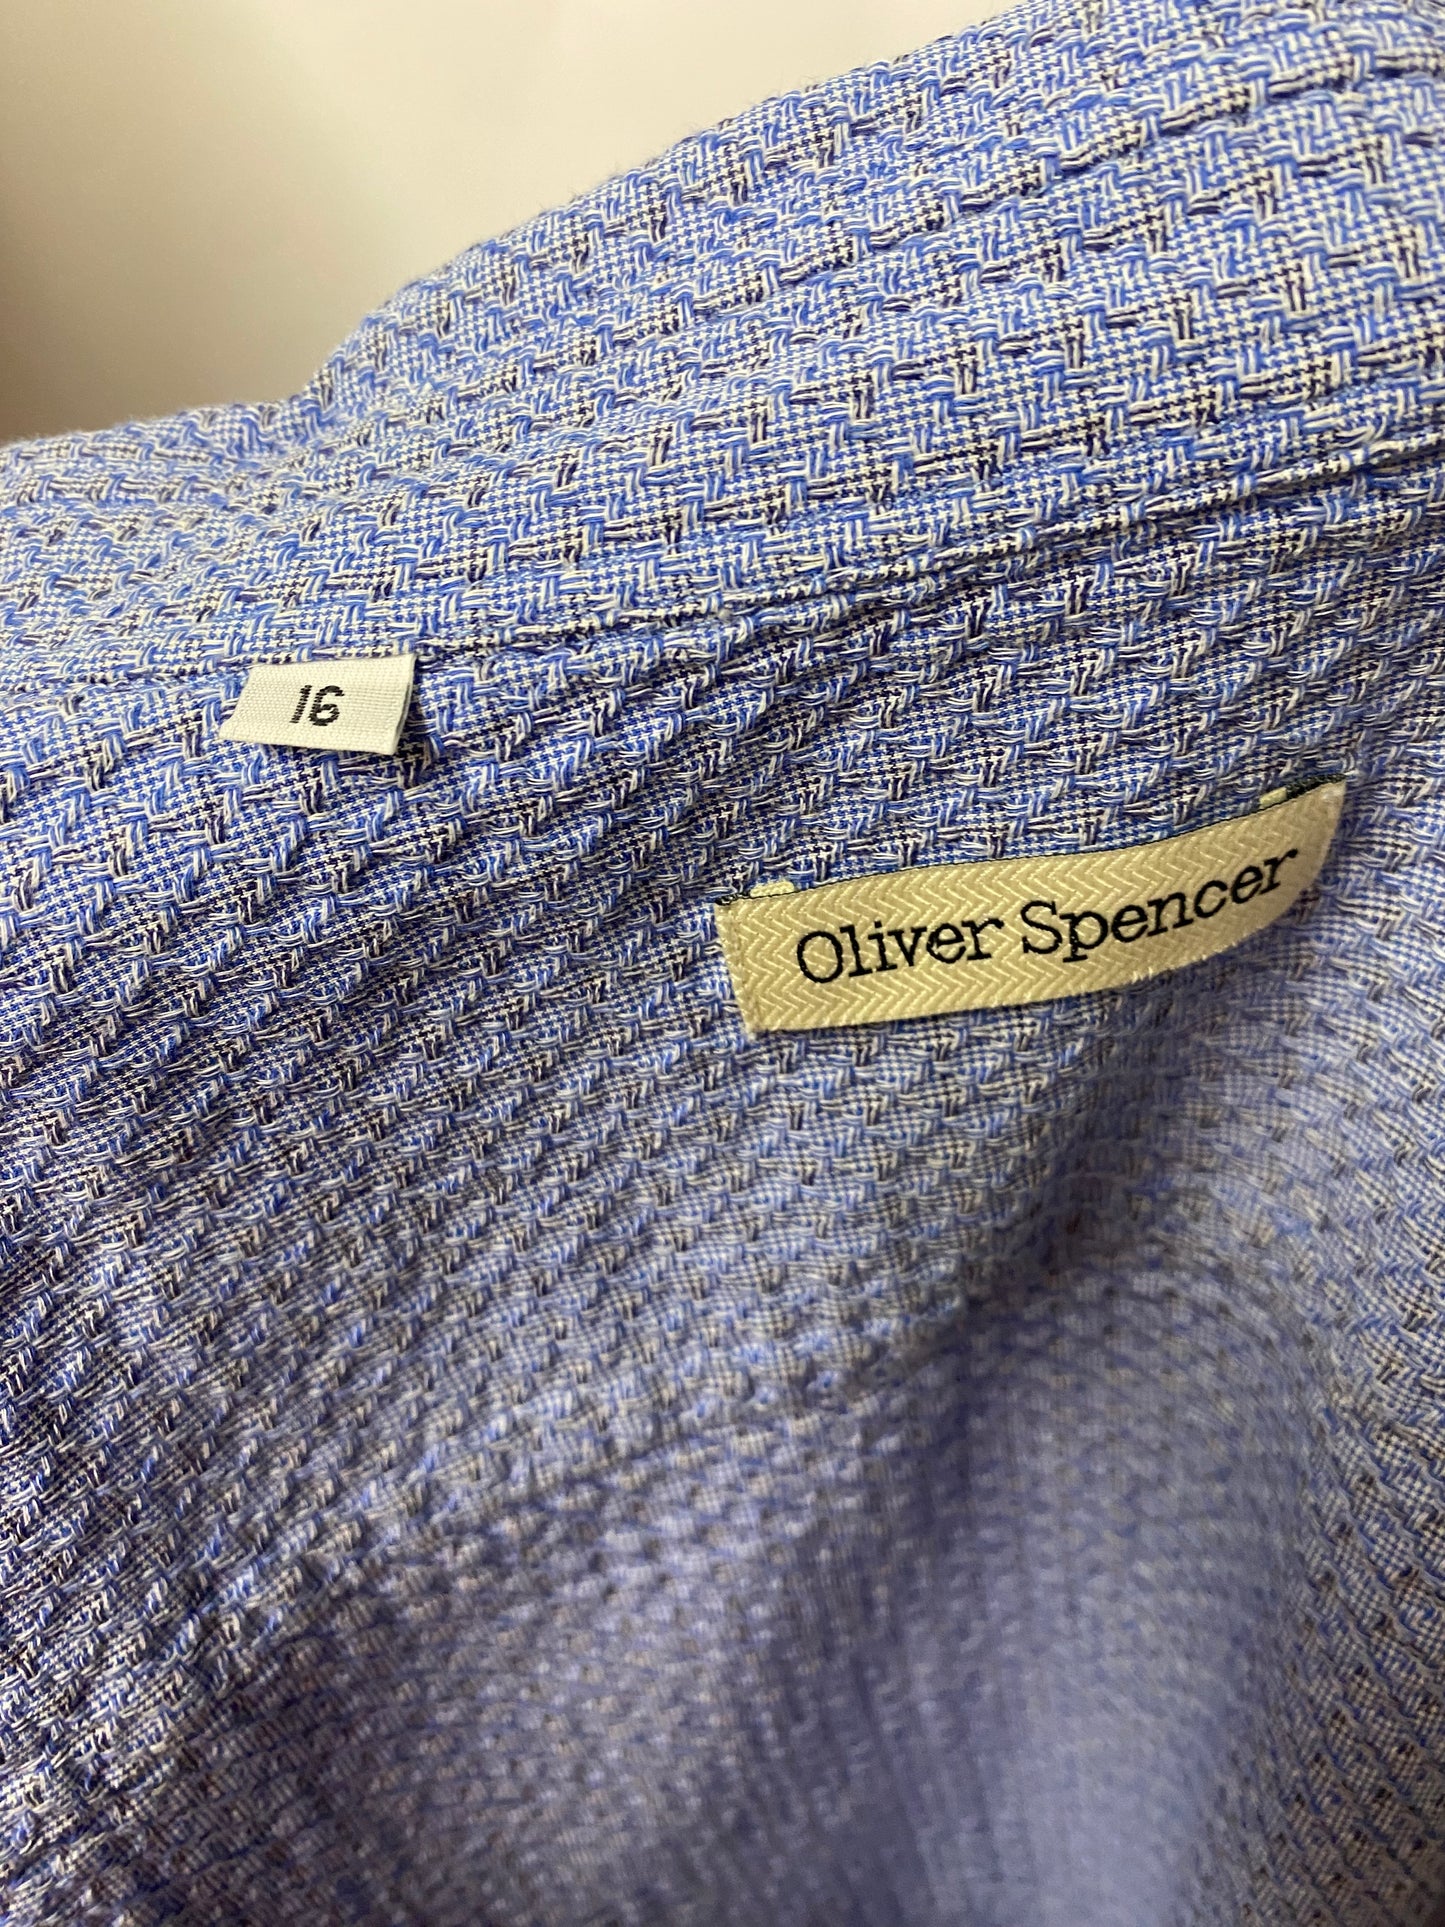 Oliver Spencer Blue Light Weight Cotton Shirt 16